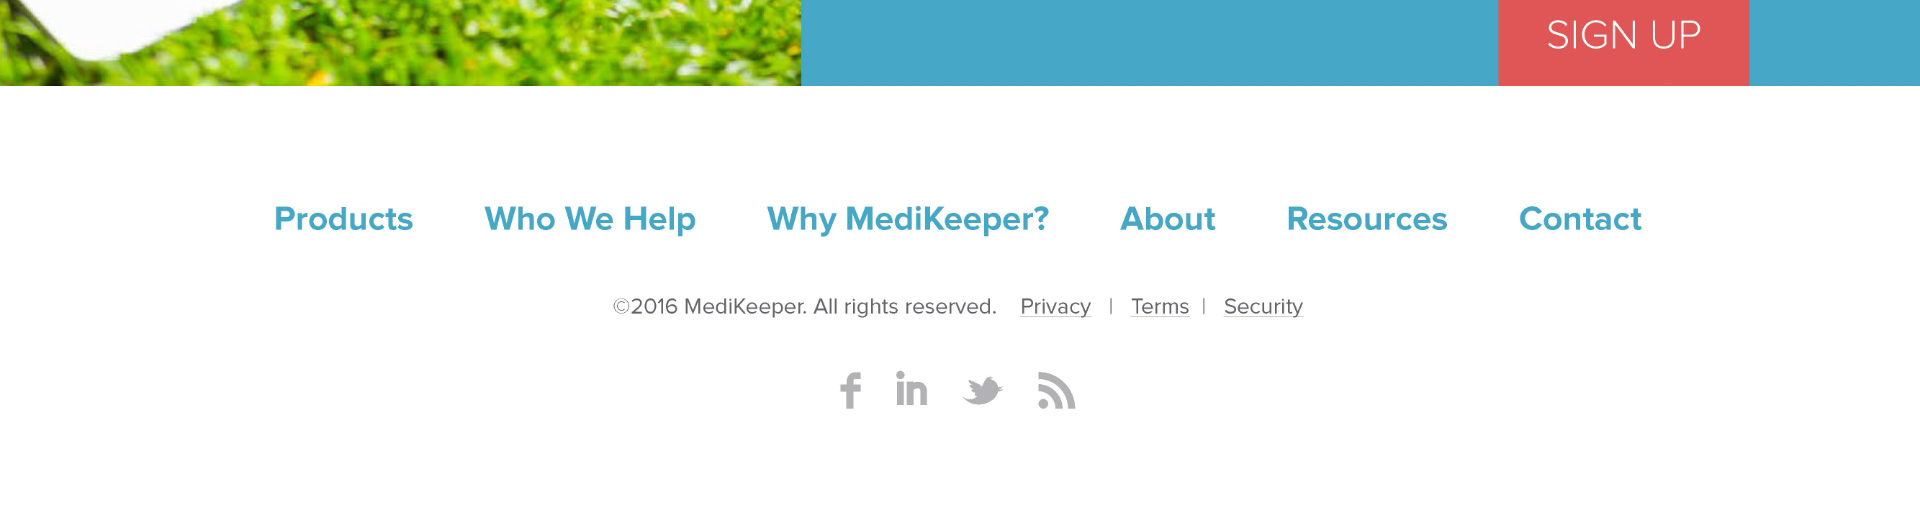 Homepage screenshot of MediKeeper